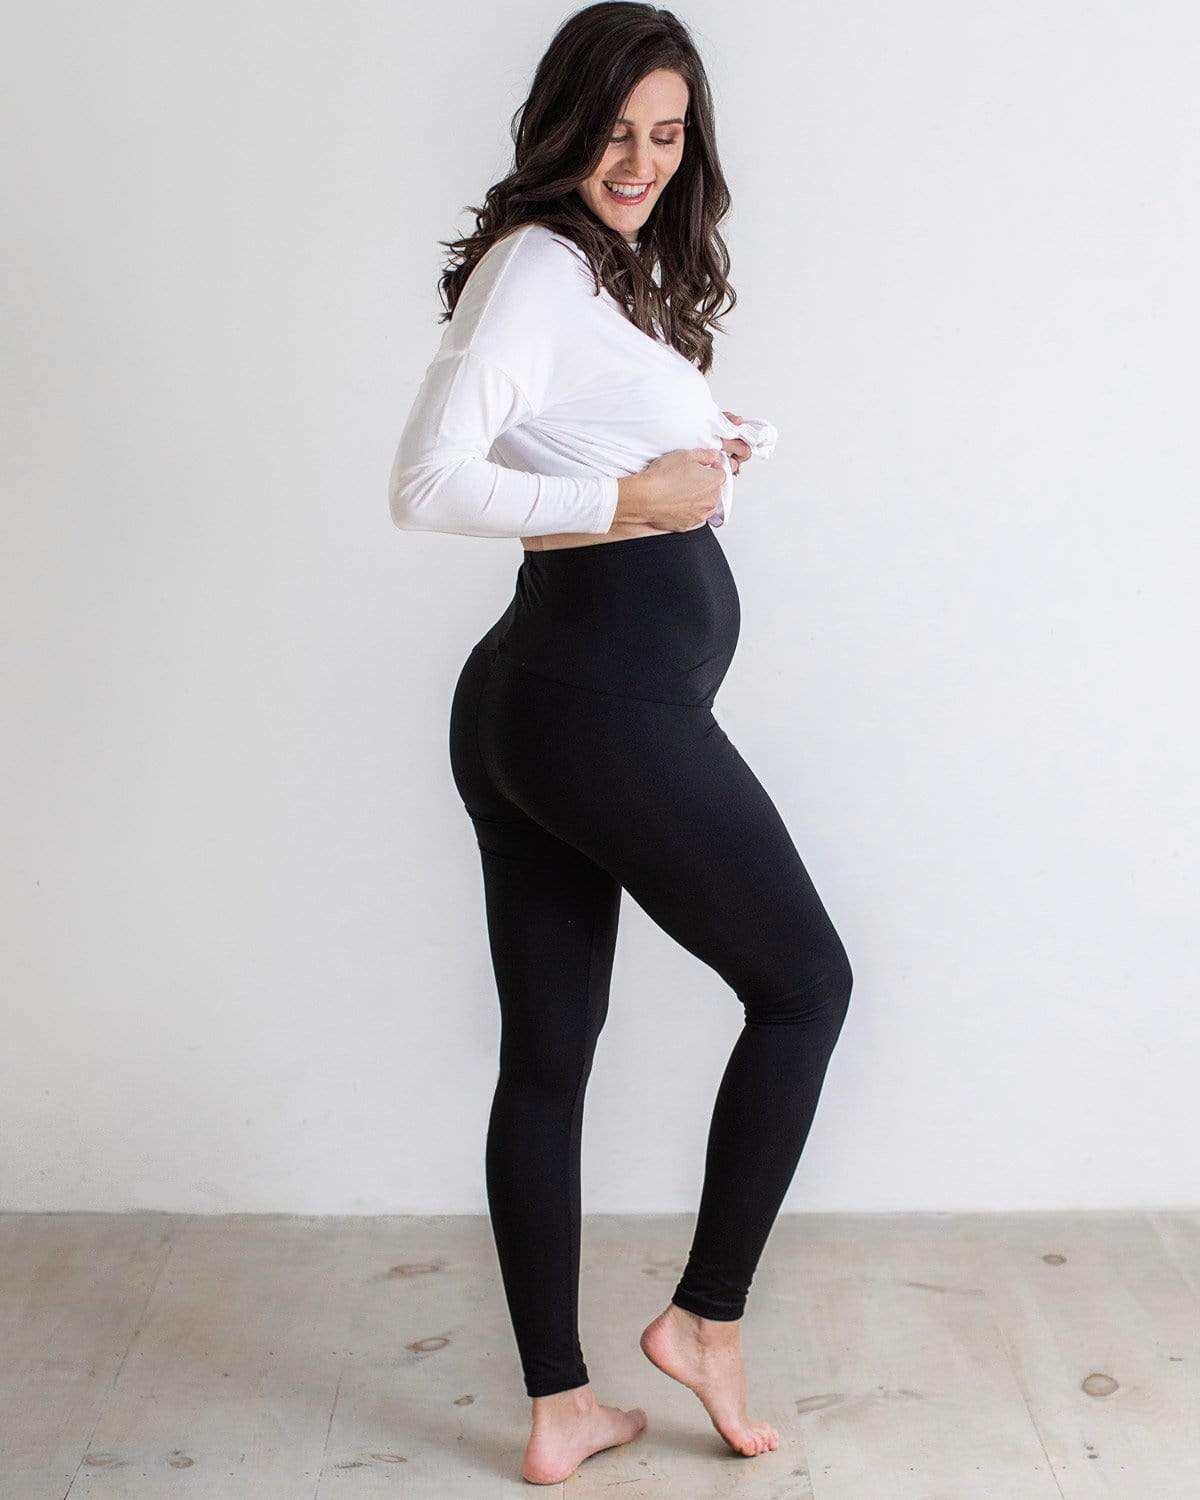 Legging Love: Post-Pregnancy Leggings That Redefine Comfort